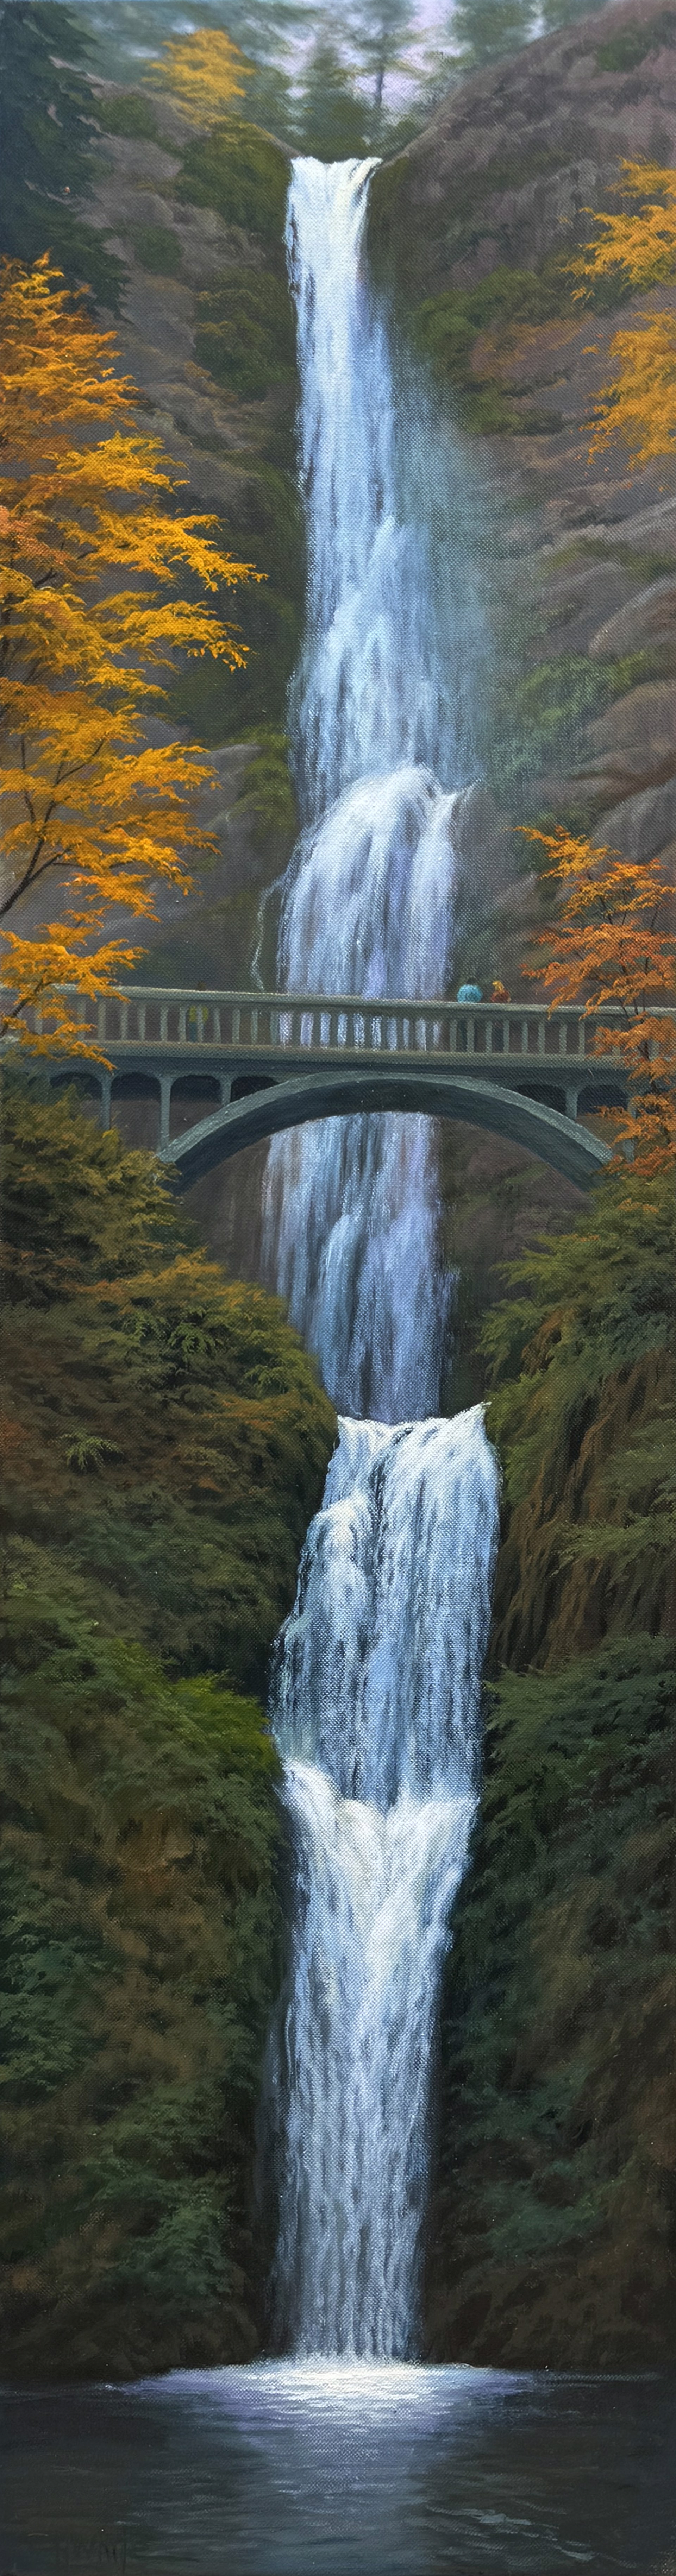 Multnomah Falls by Charles White